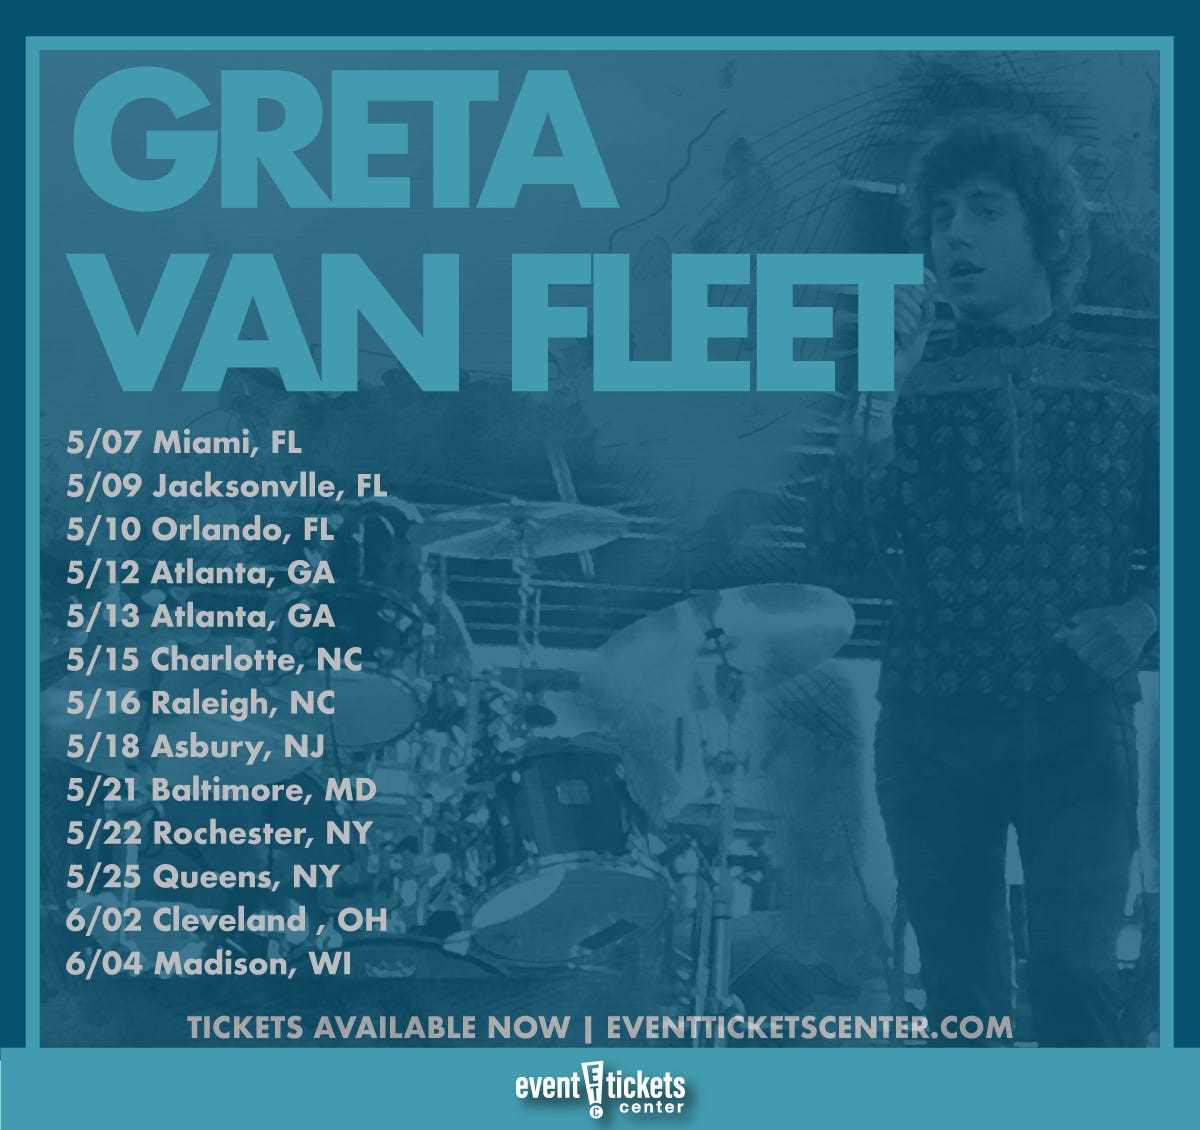 tour dates for greta van fleet